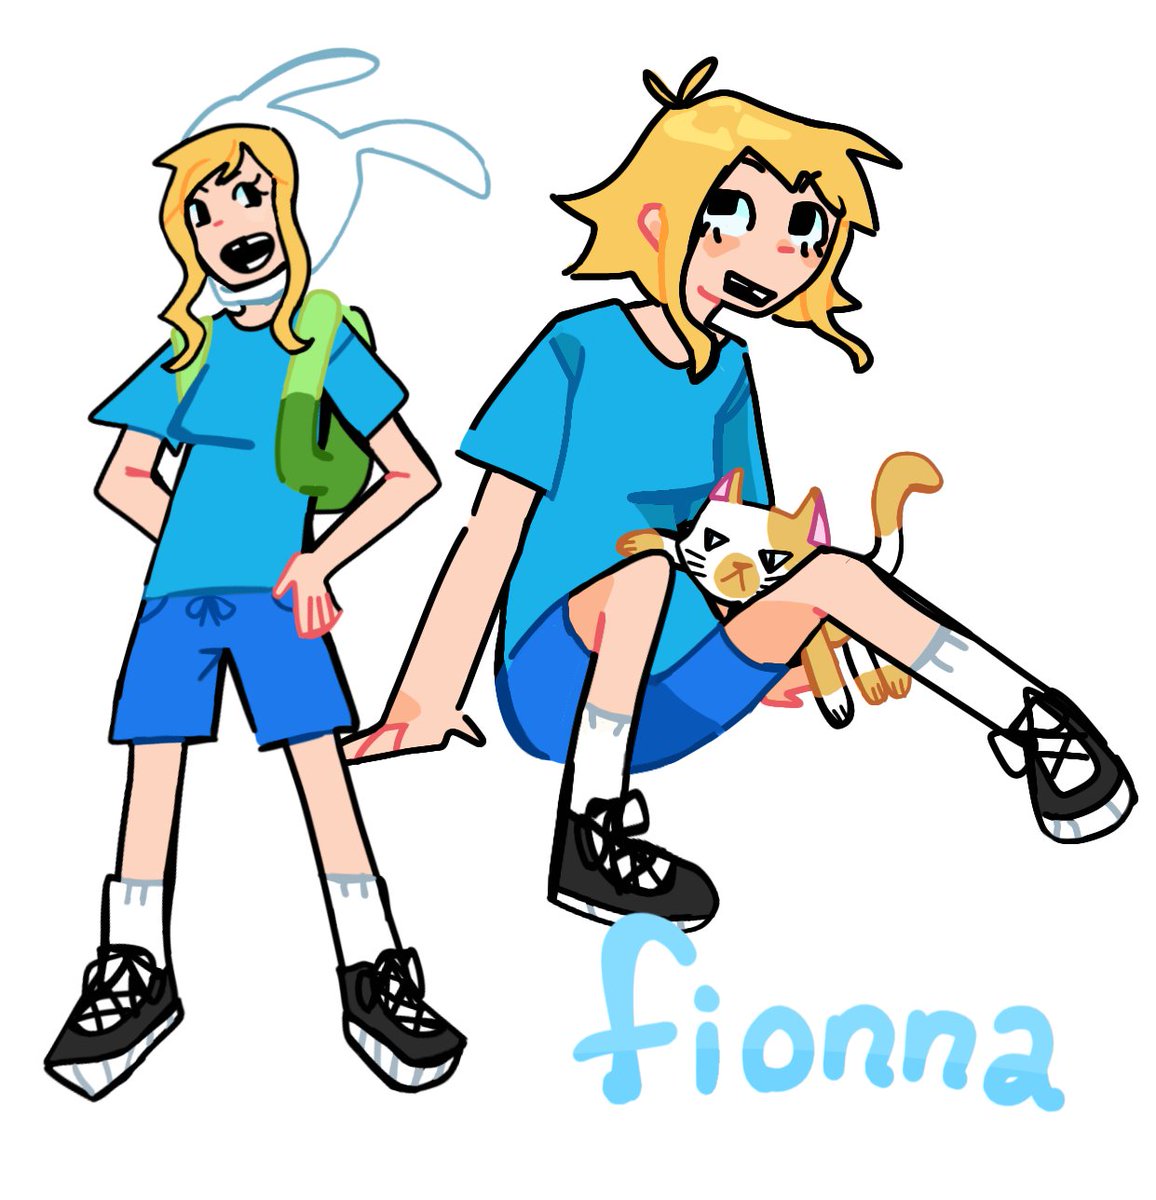 fionna!!1!1! #fionnaandcake #adventuretime